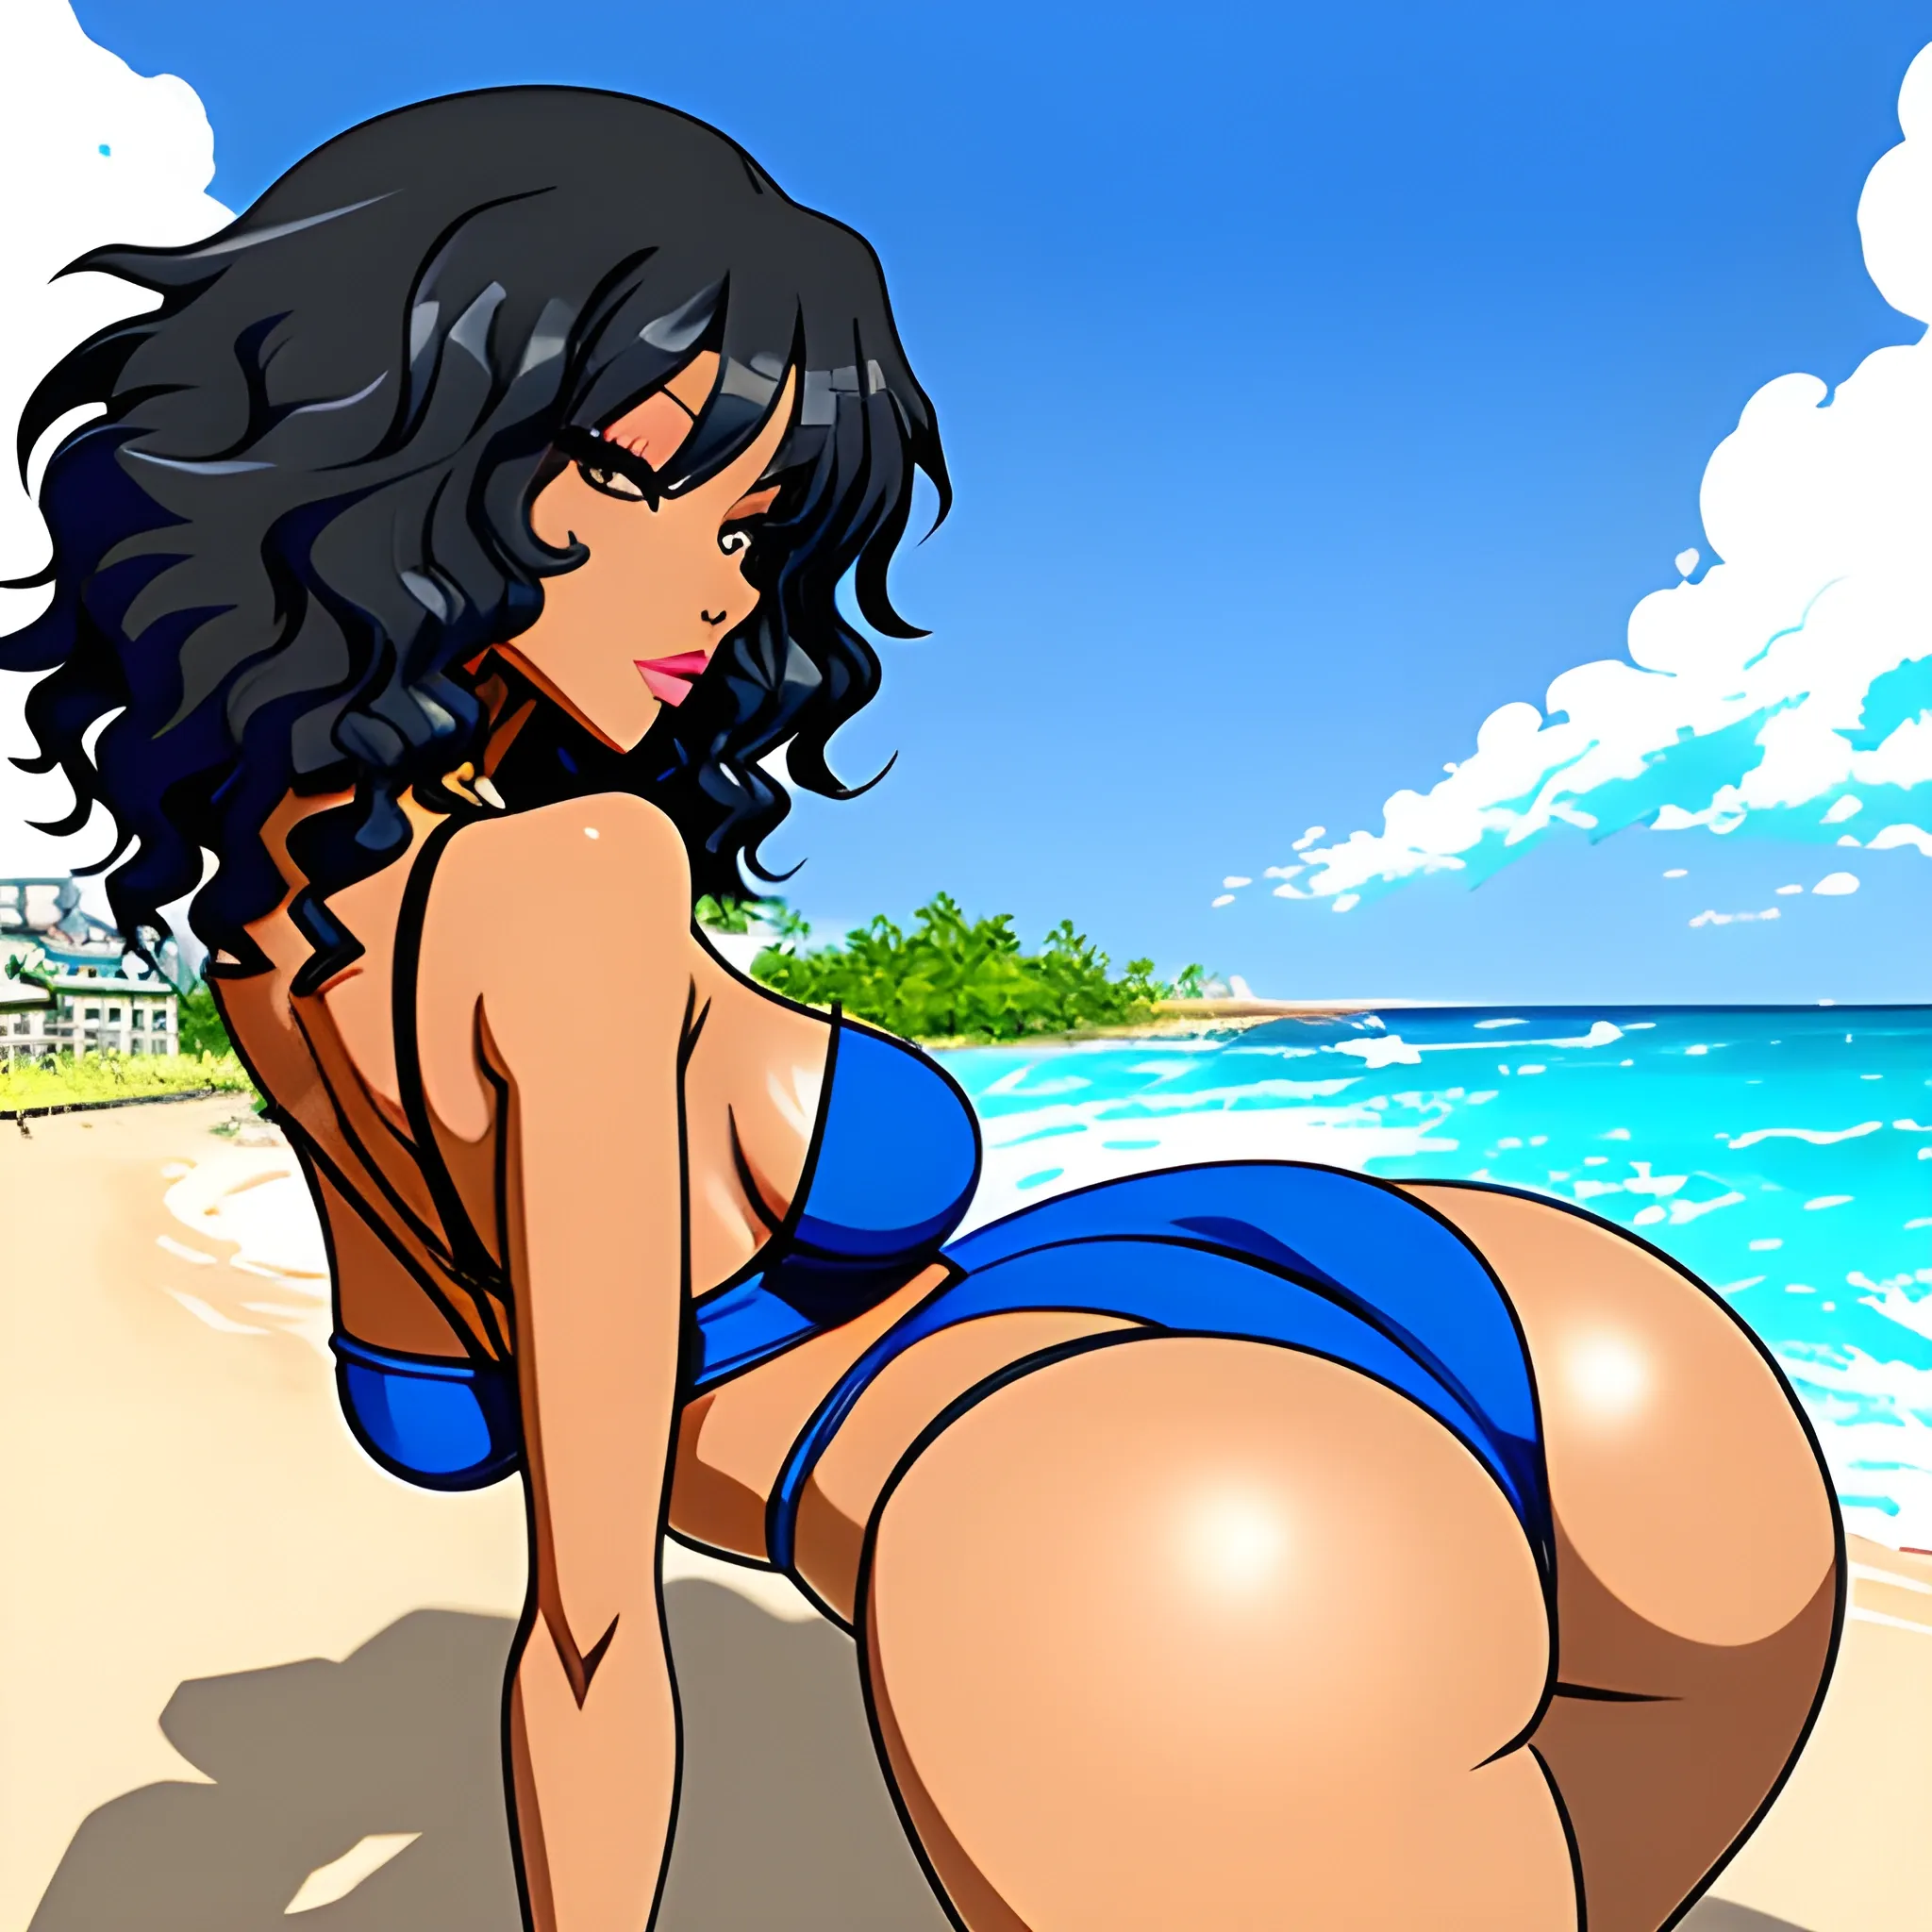 Anime,beach,rear view, blackskin,cute girl,black curly hair,blue bra, blue panties,cartoon,hand under, huge butt, , Cartoon,big breast

